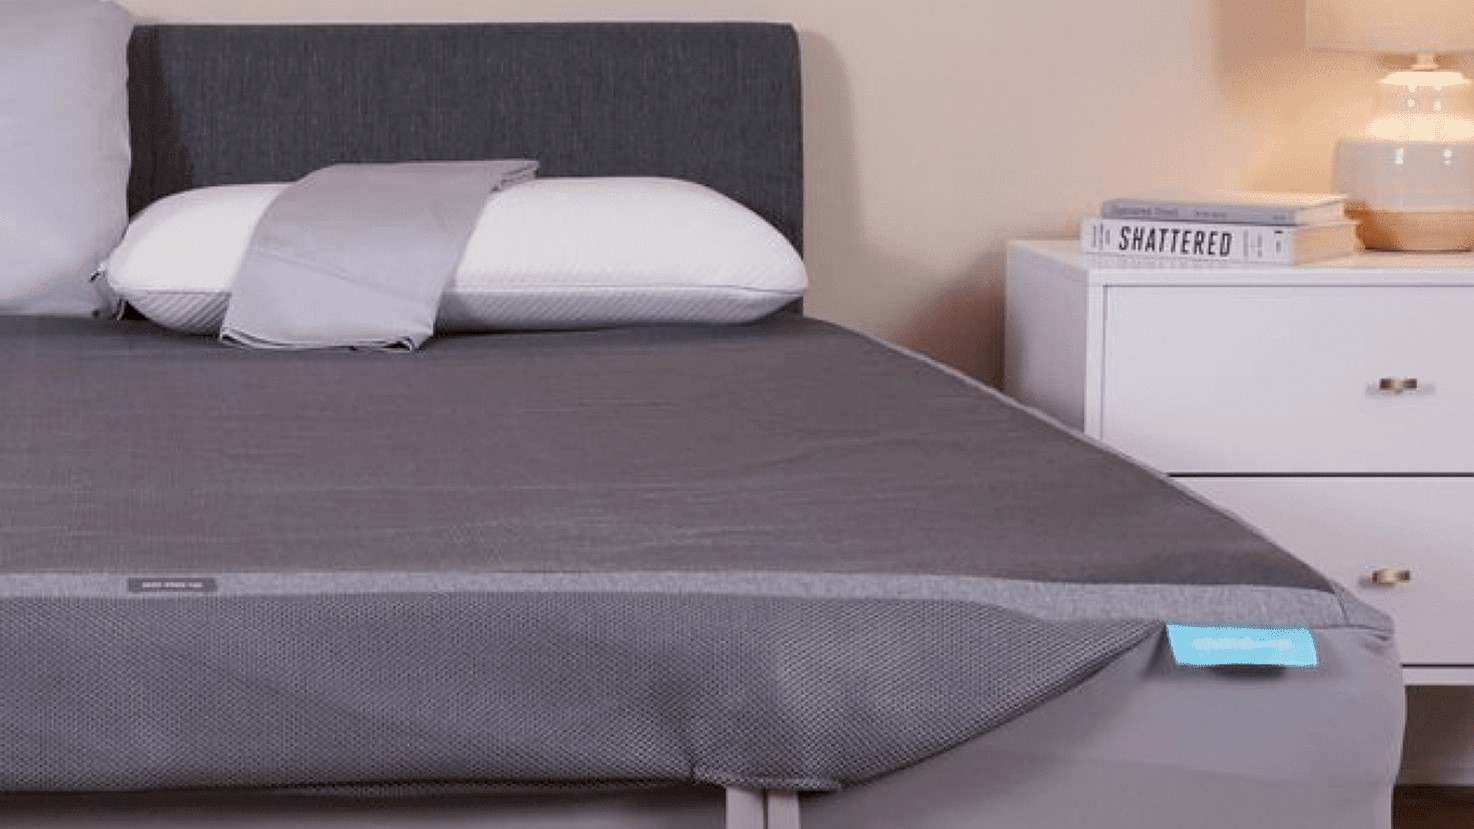 Chilisleep Dock Pro mattress topper on a bed